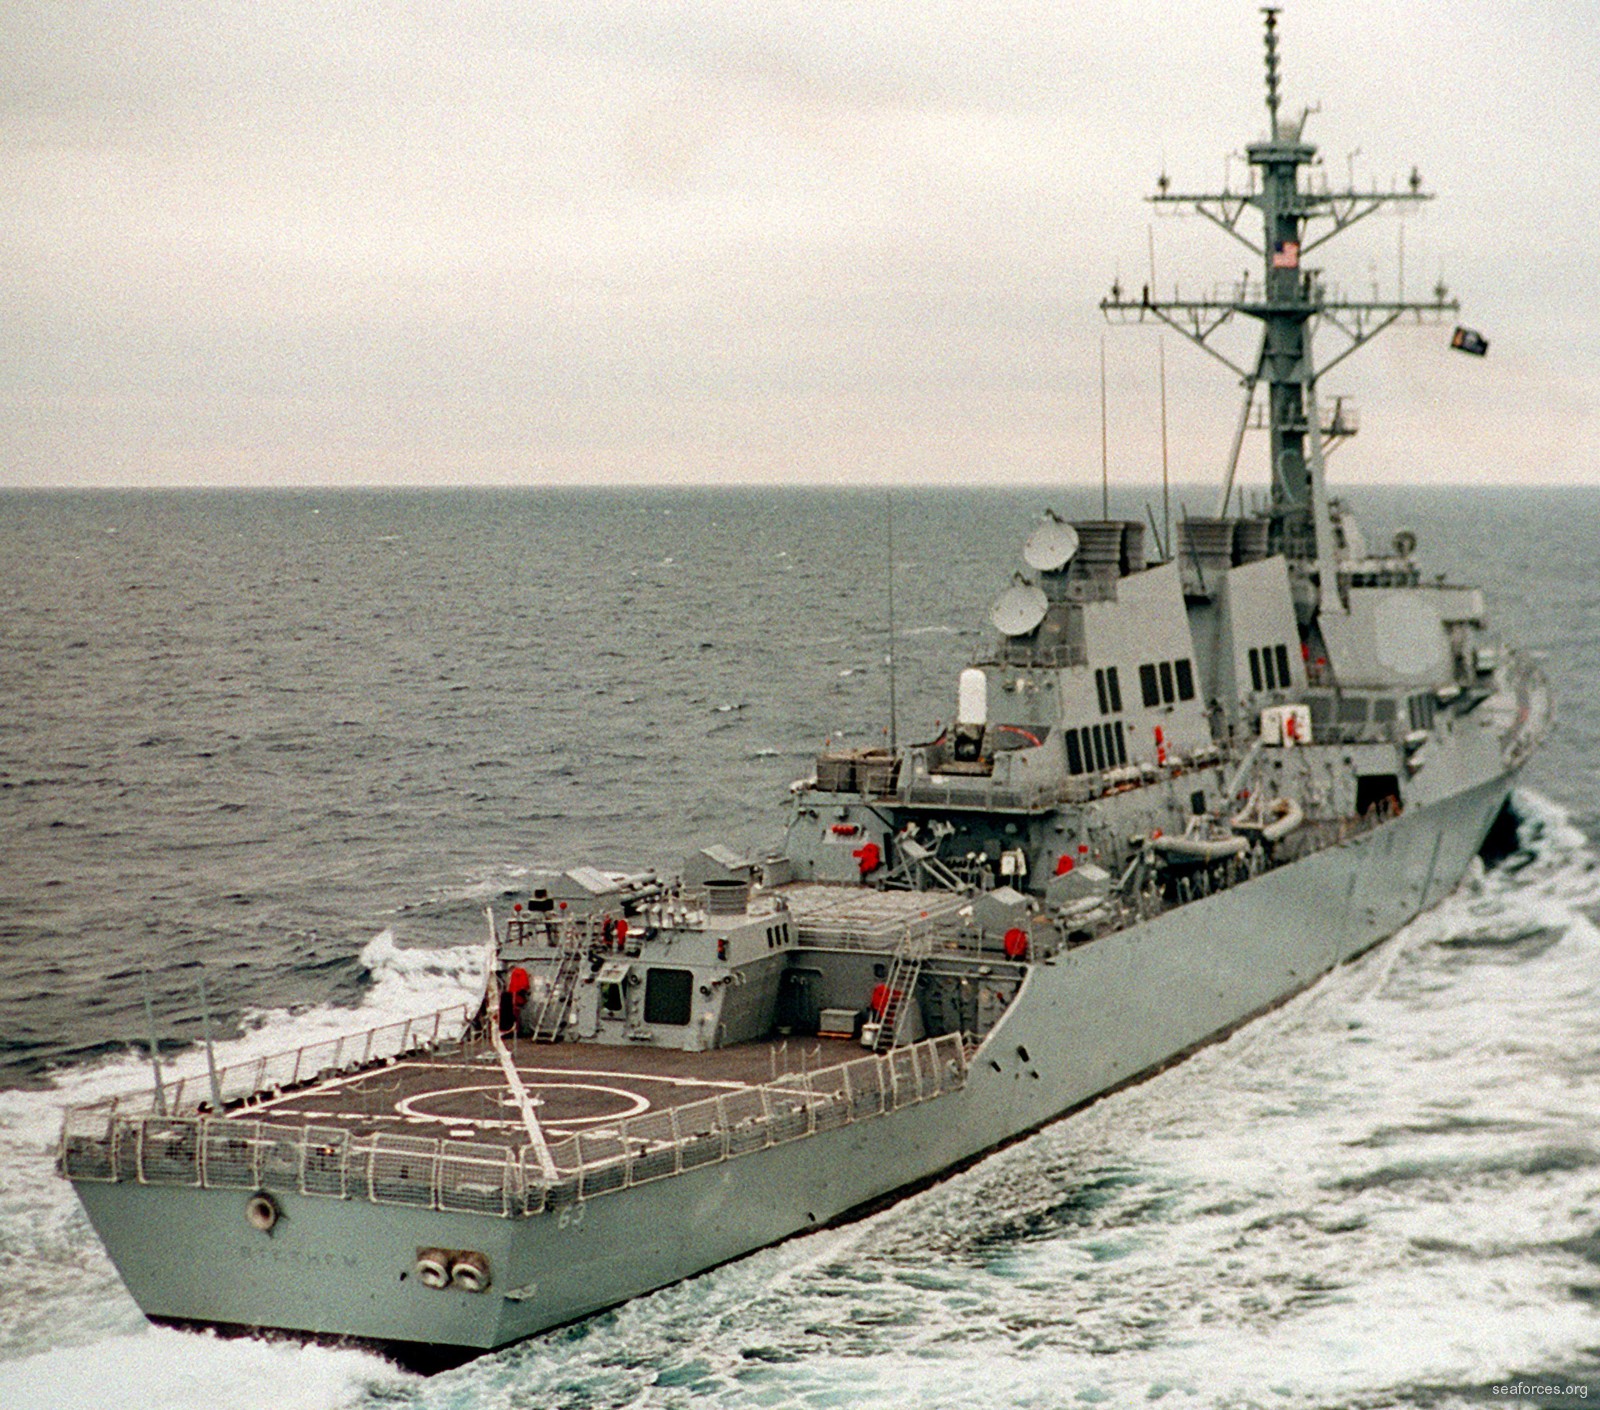 ddg-63 uss stethem guided missile destroyer 57 sea trials